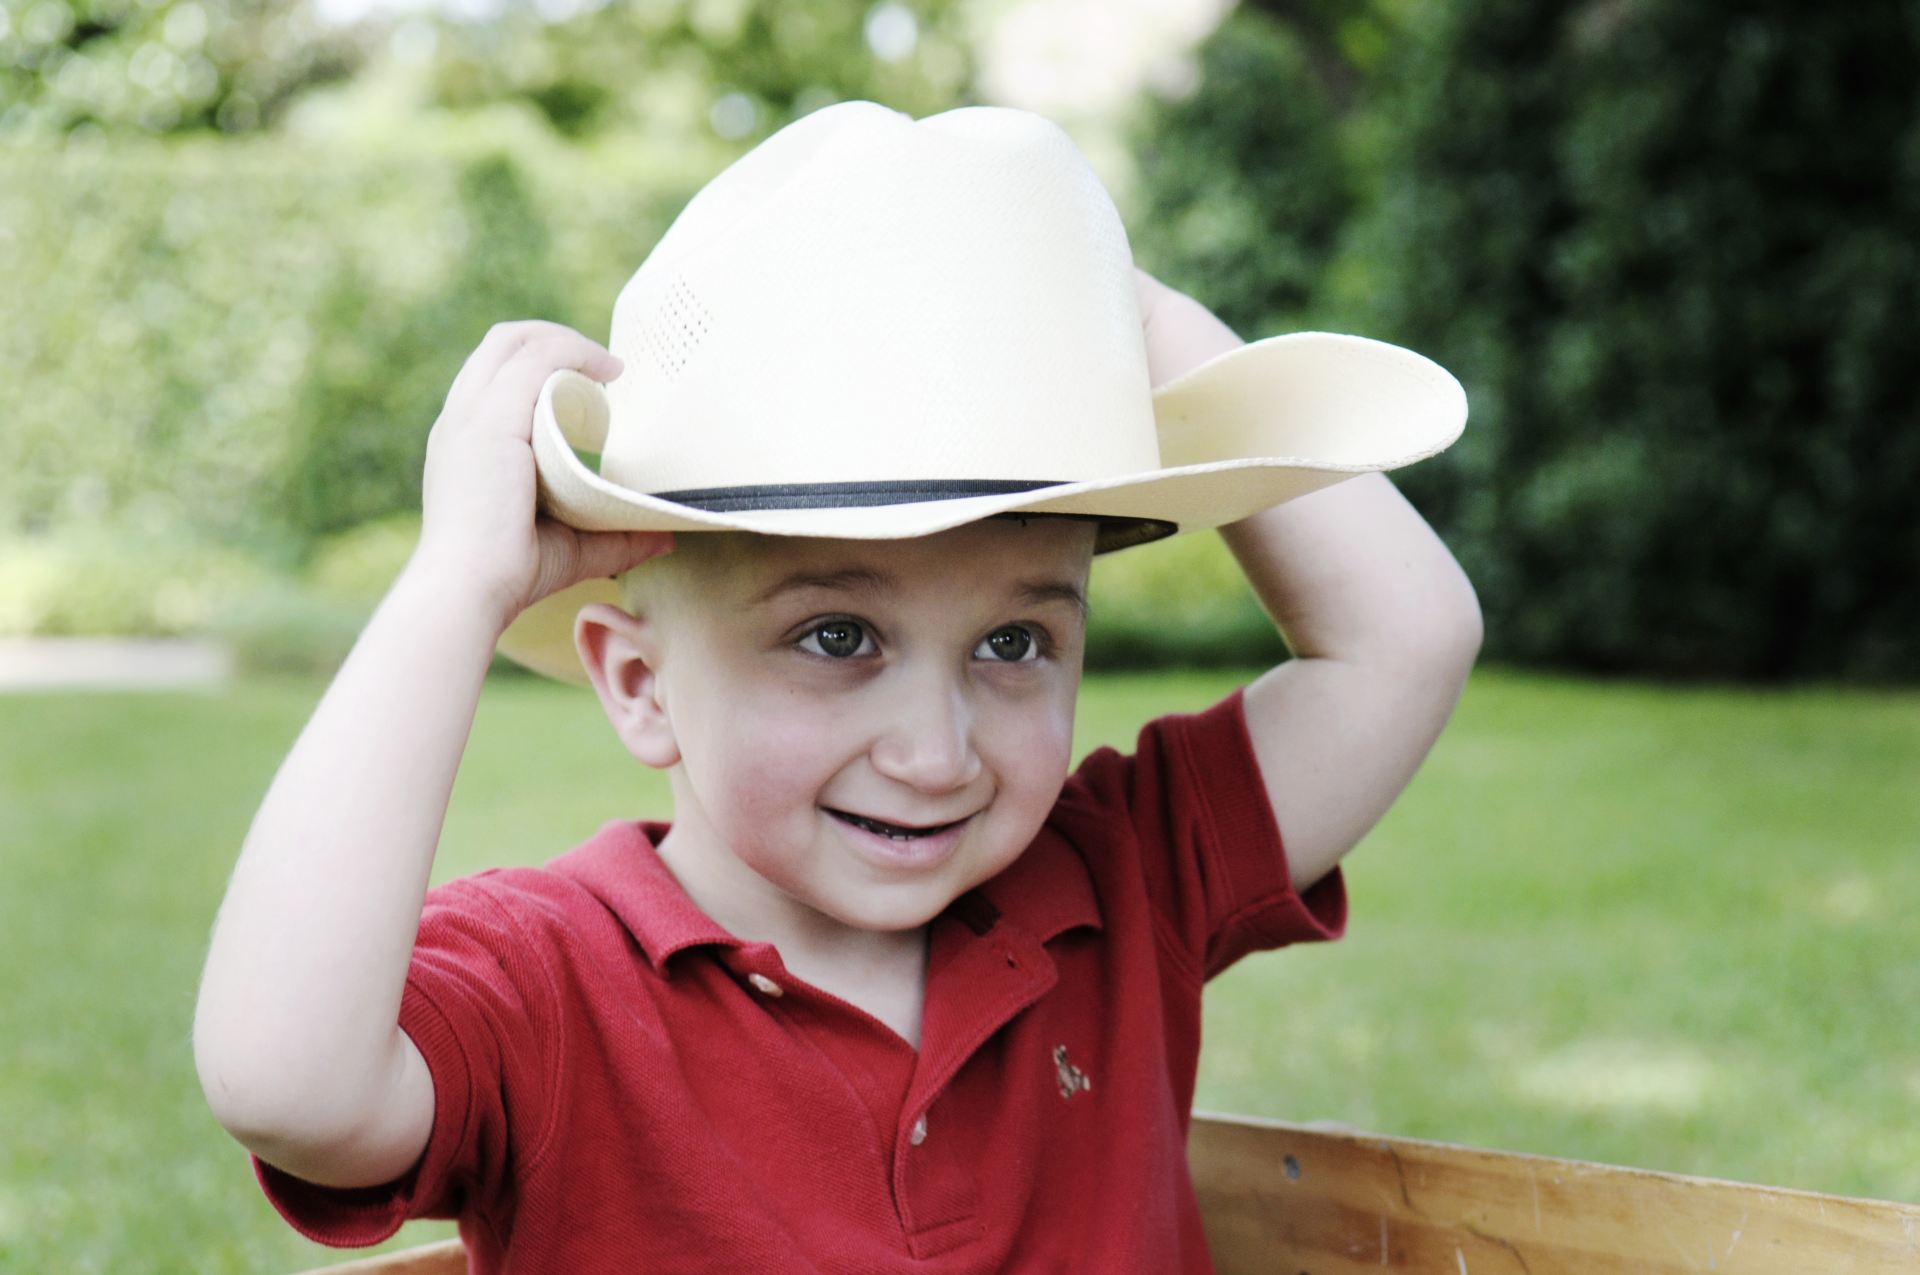 Ryan Goldblatt wearing cowboy hat and red polo shirt.